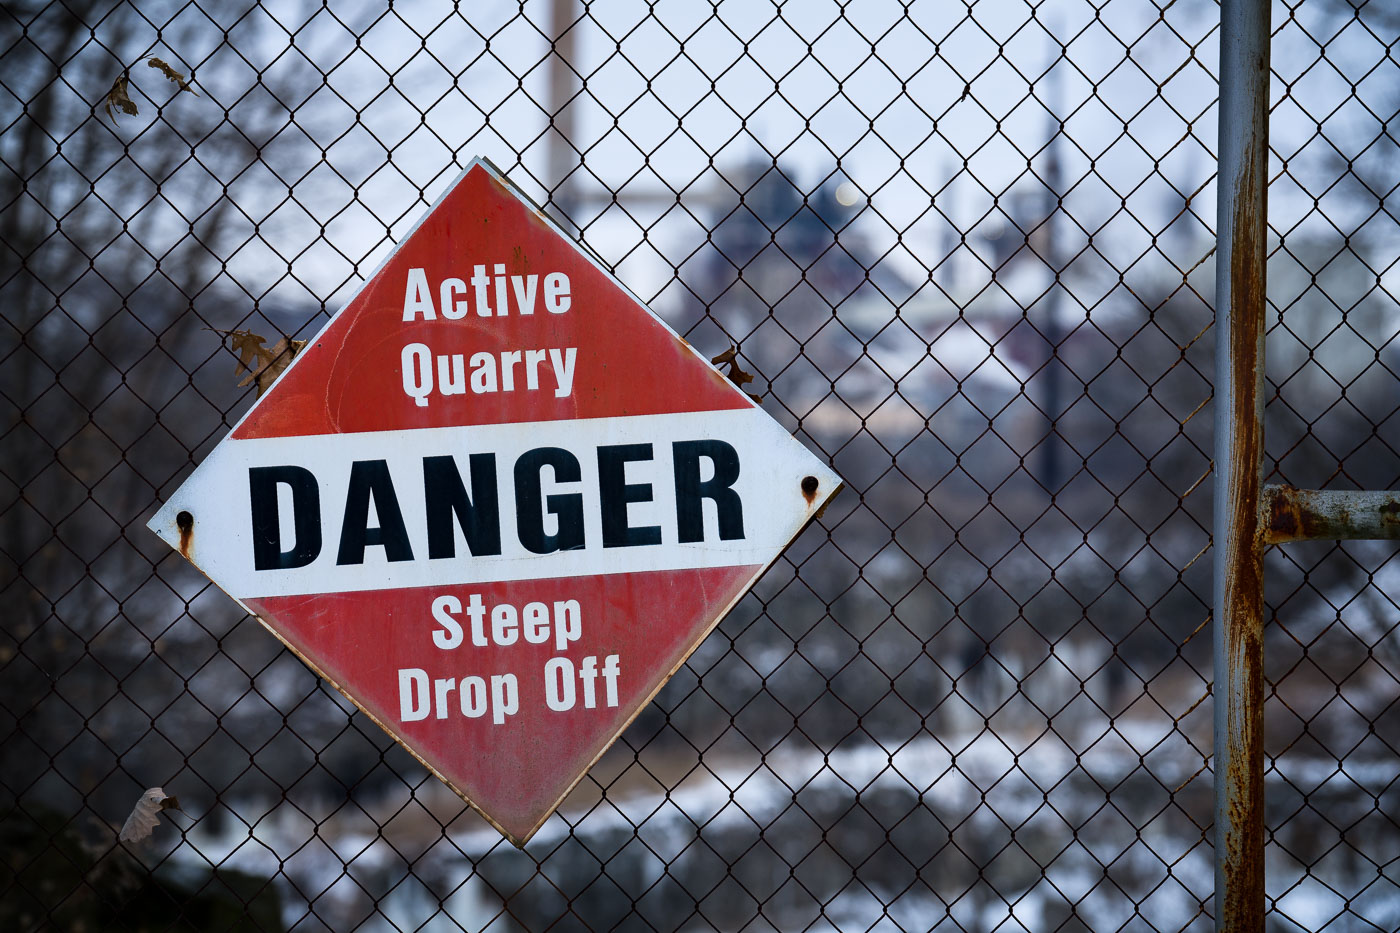 Active quarry danger sign